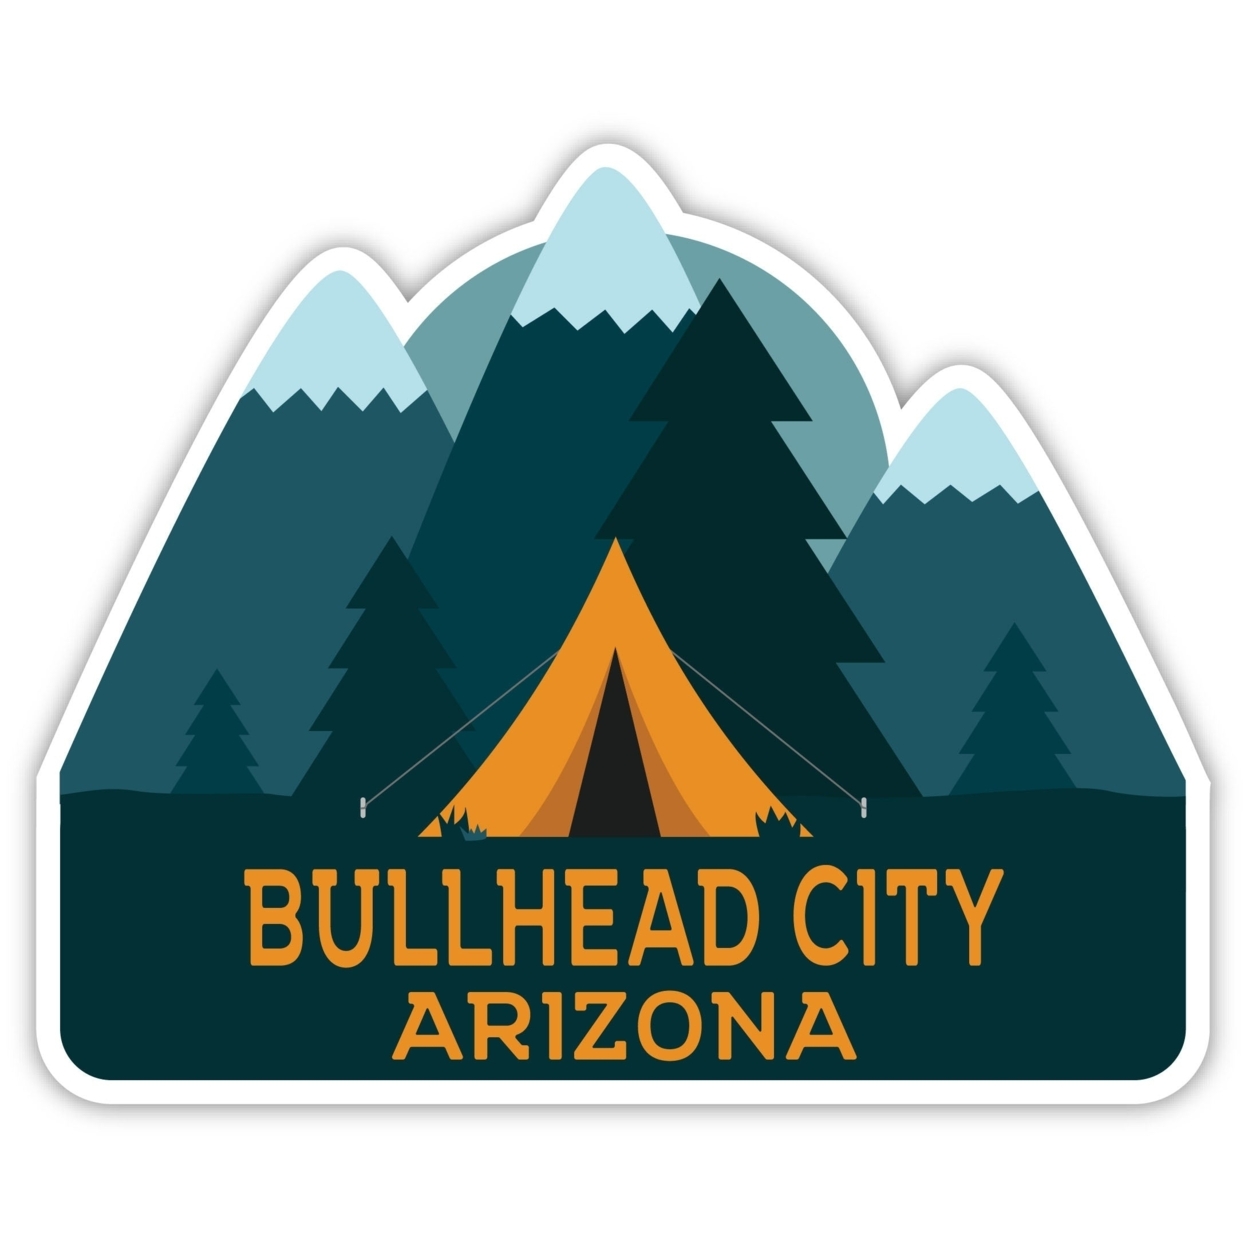 Bullhead City Arizona Souvenir Decorative Stickers (Choose Theme And Size) - 4-Pack, 8-Inch, Adventures Awaits